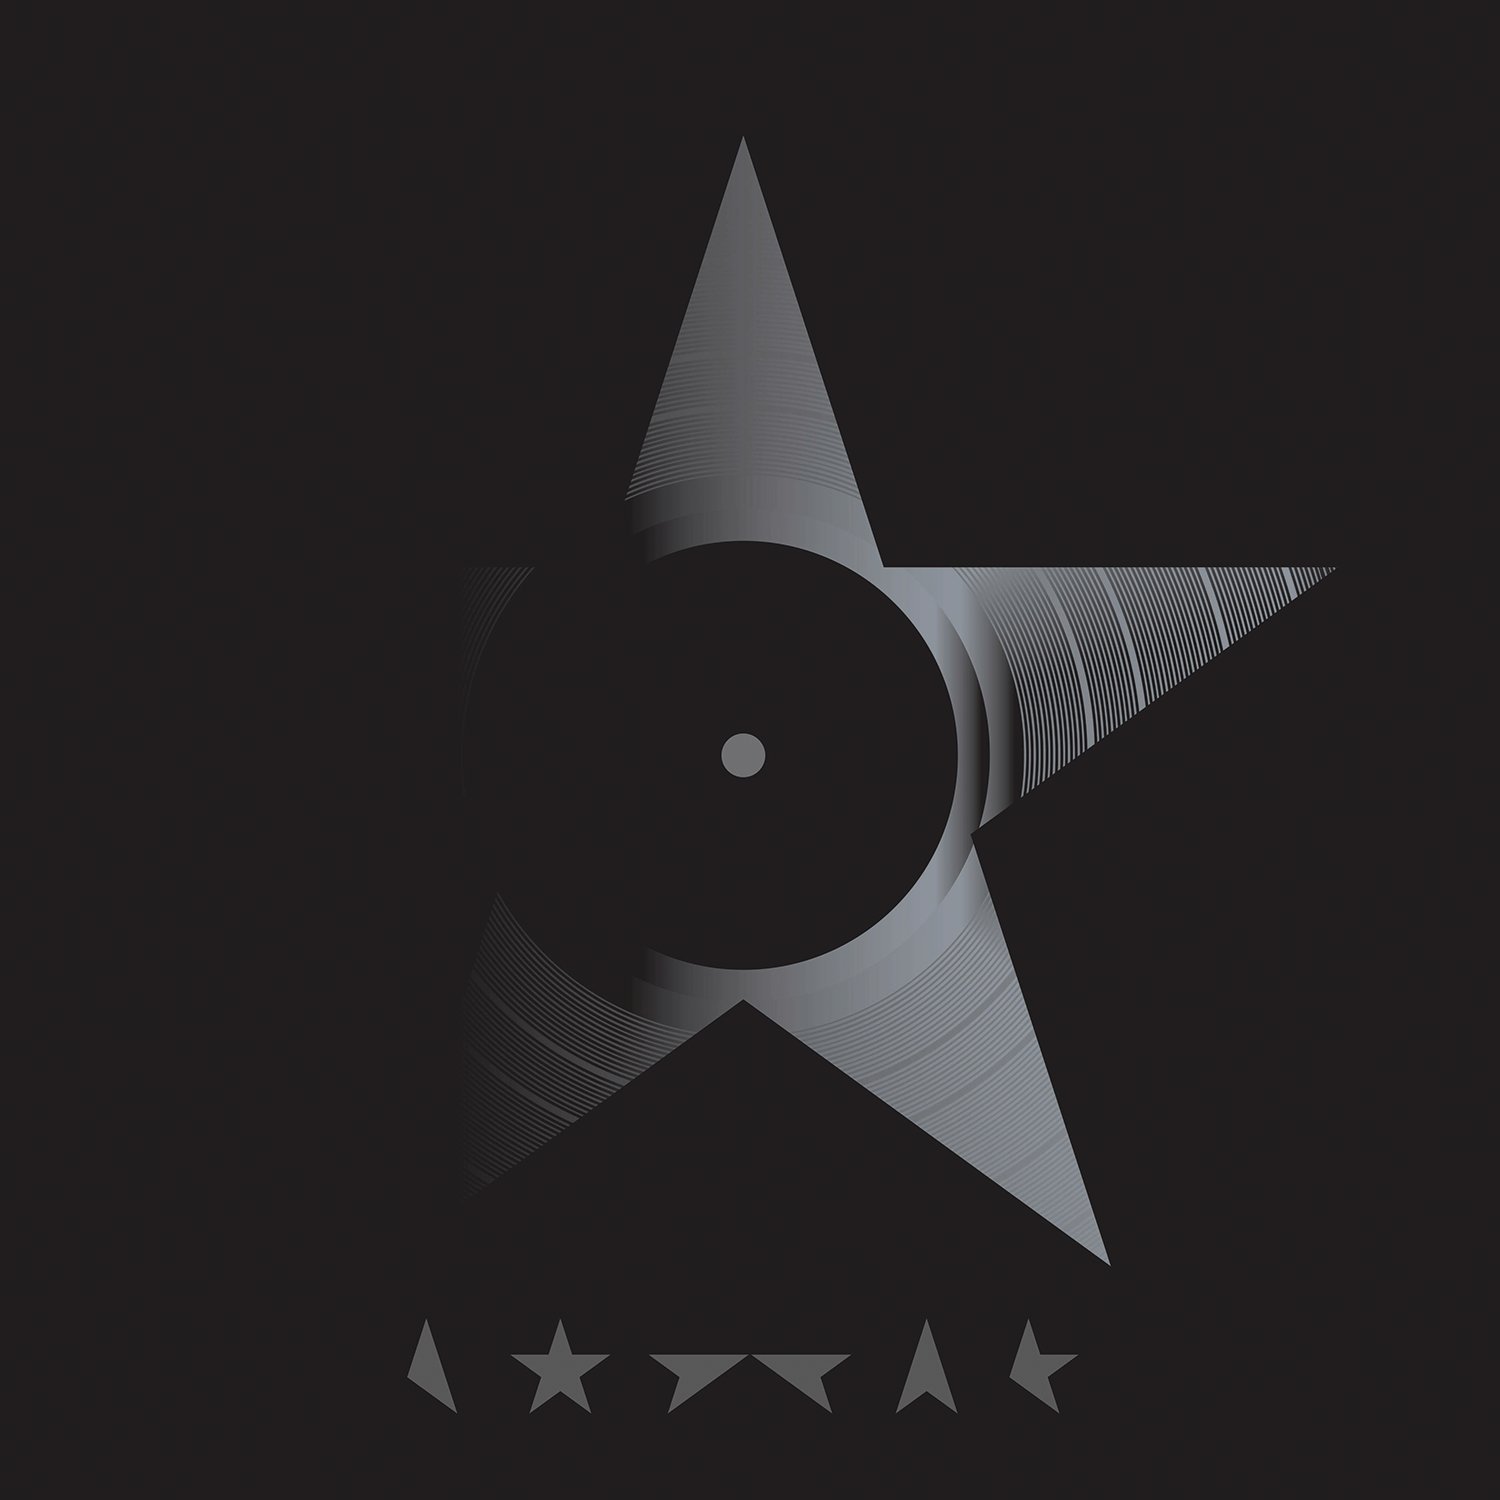 Album Art for Blackstar by David Bowie